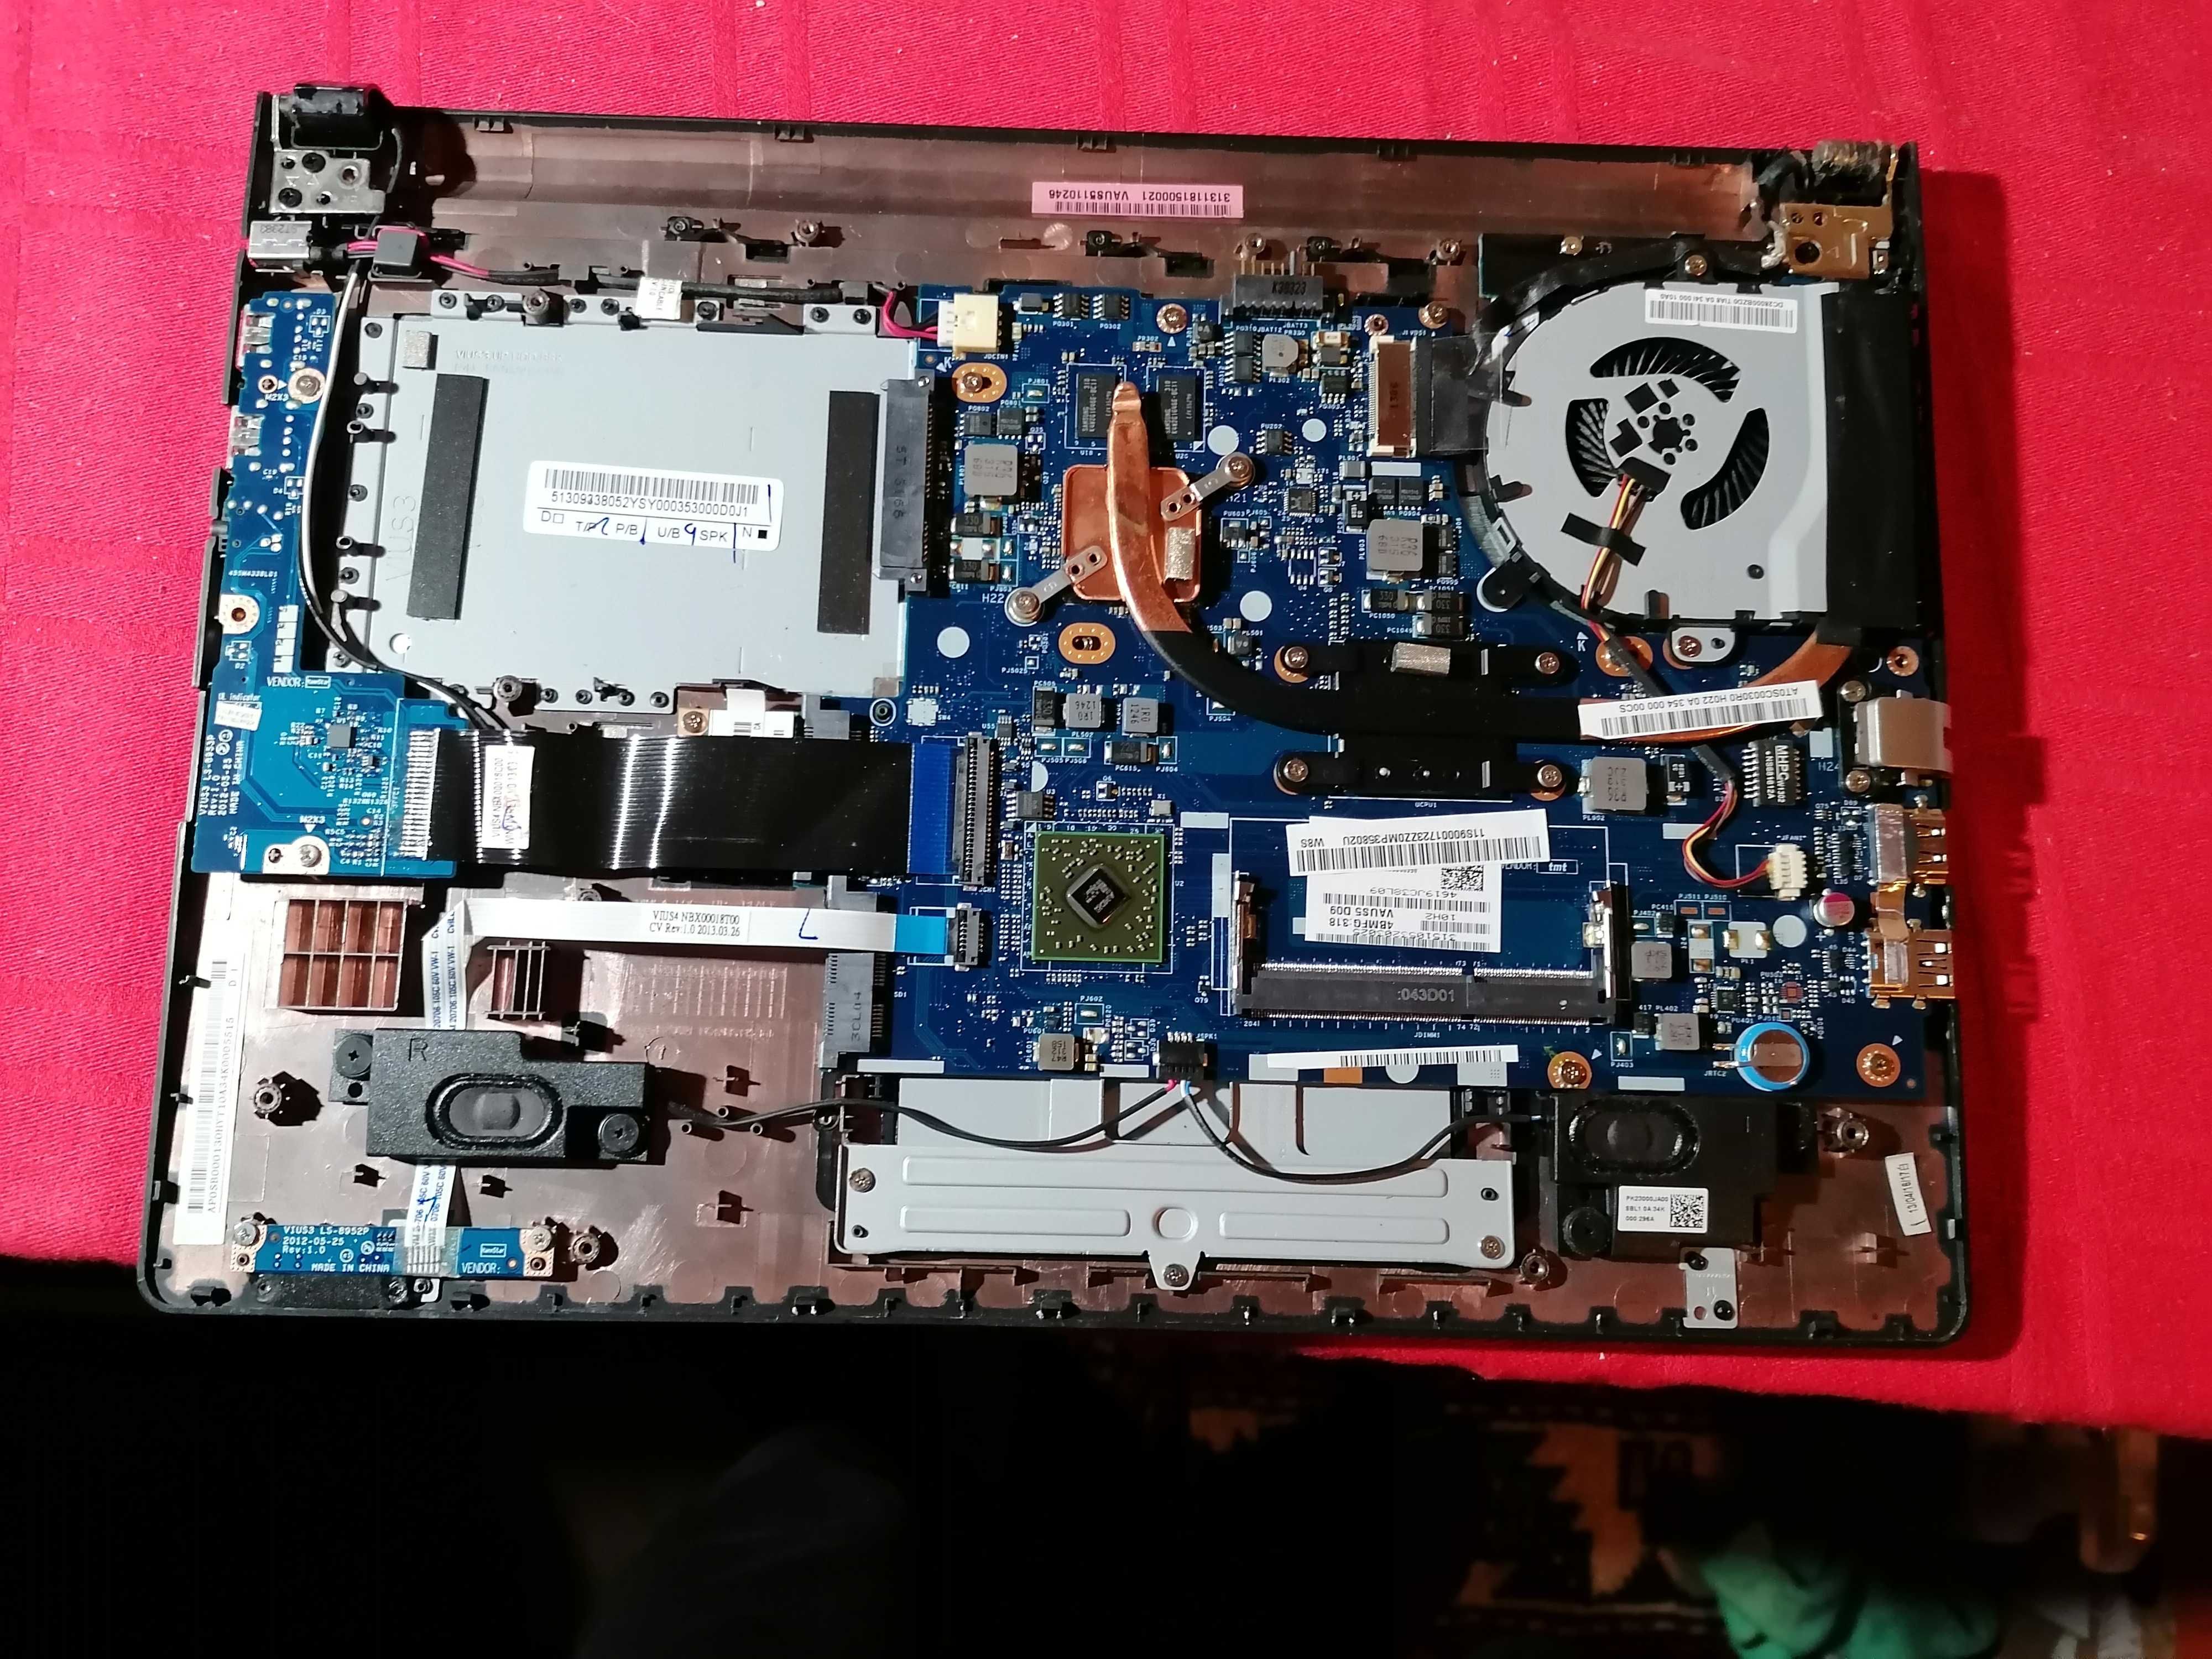 Laptop Lenovo IdeaPad S405  AMD A8-4555M